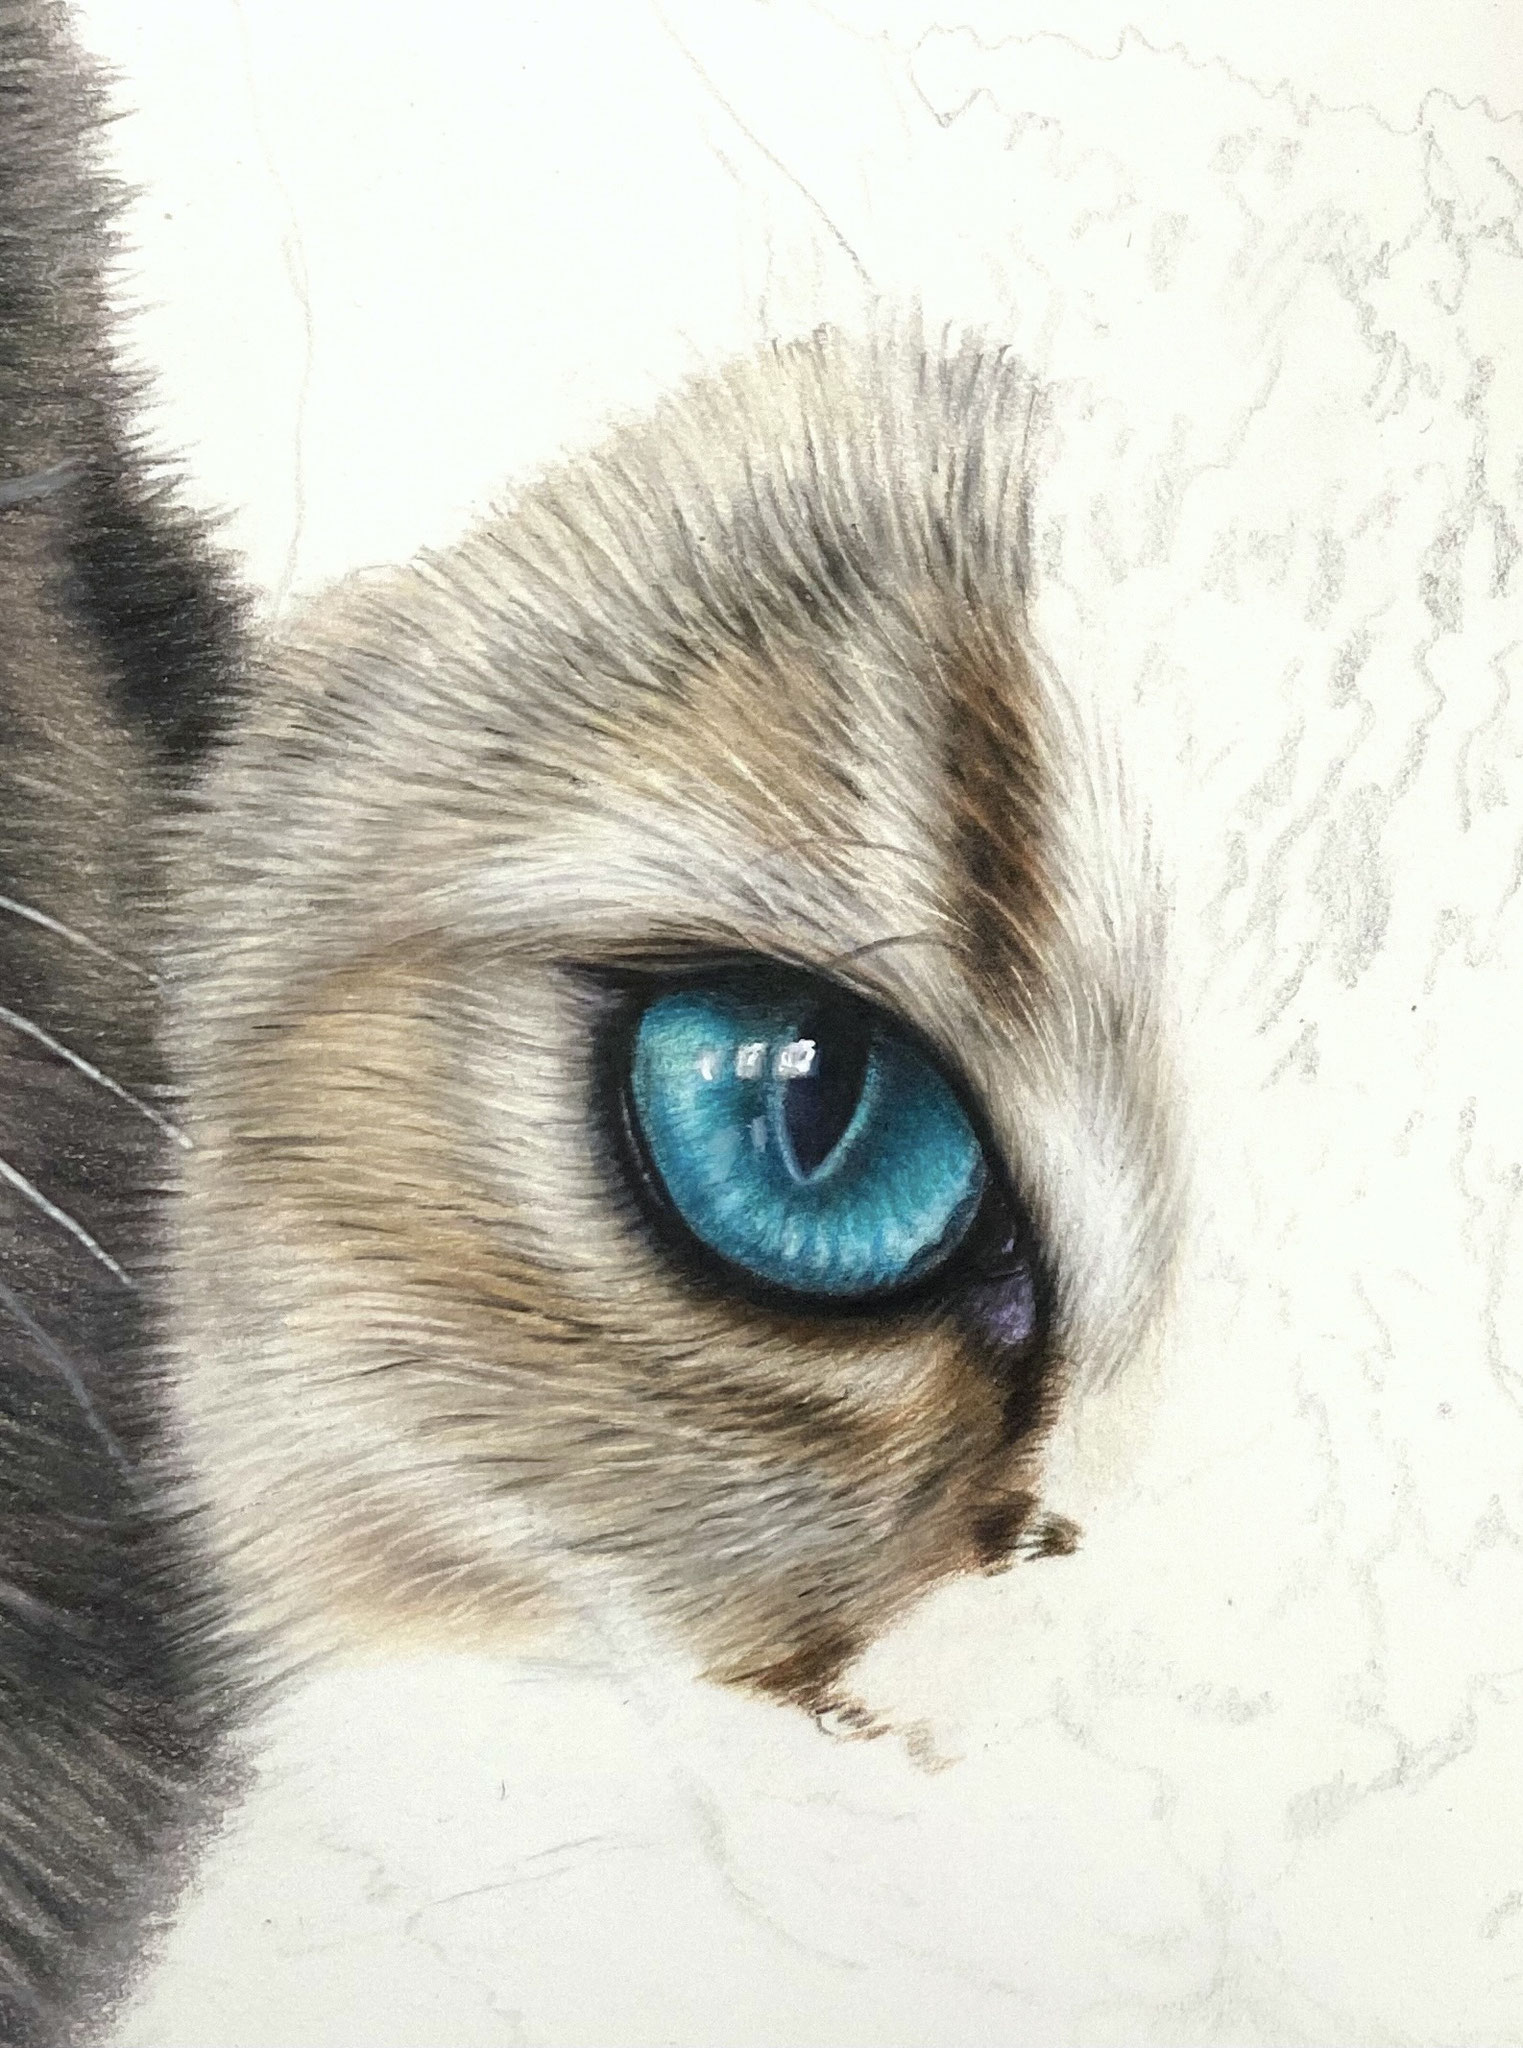 Cat's eye & cream tabby fur, focus tutorial.